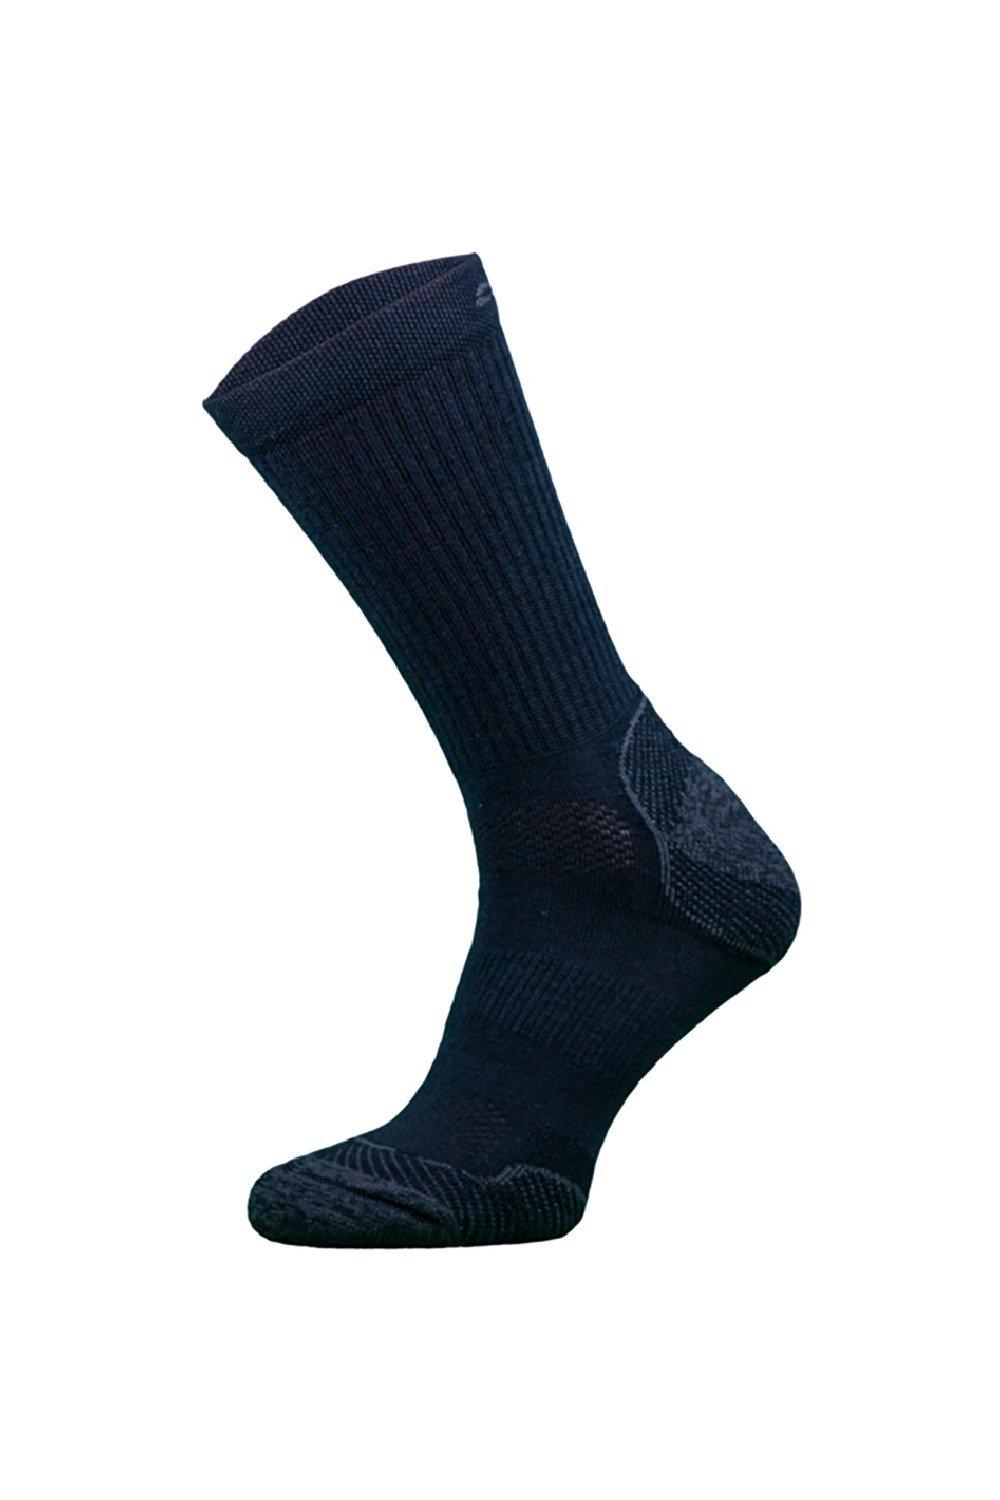 Outdoor Performance Merino Wool Quick Drying Lightweight Socks